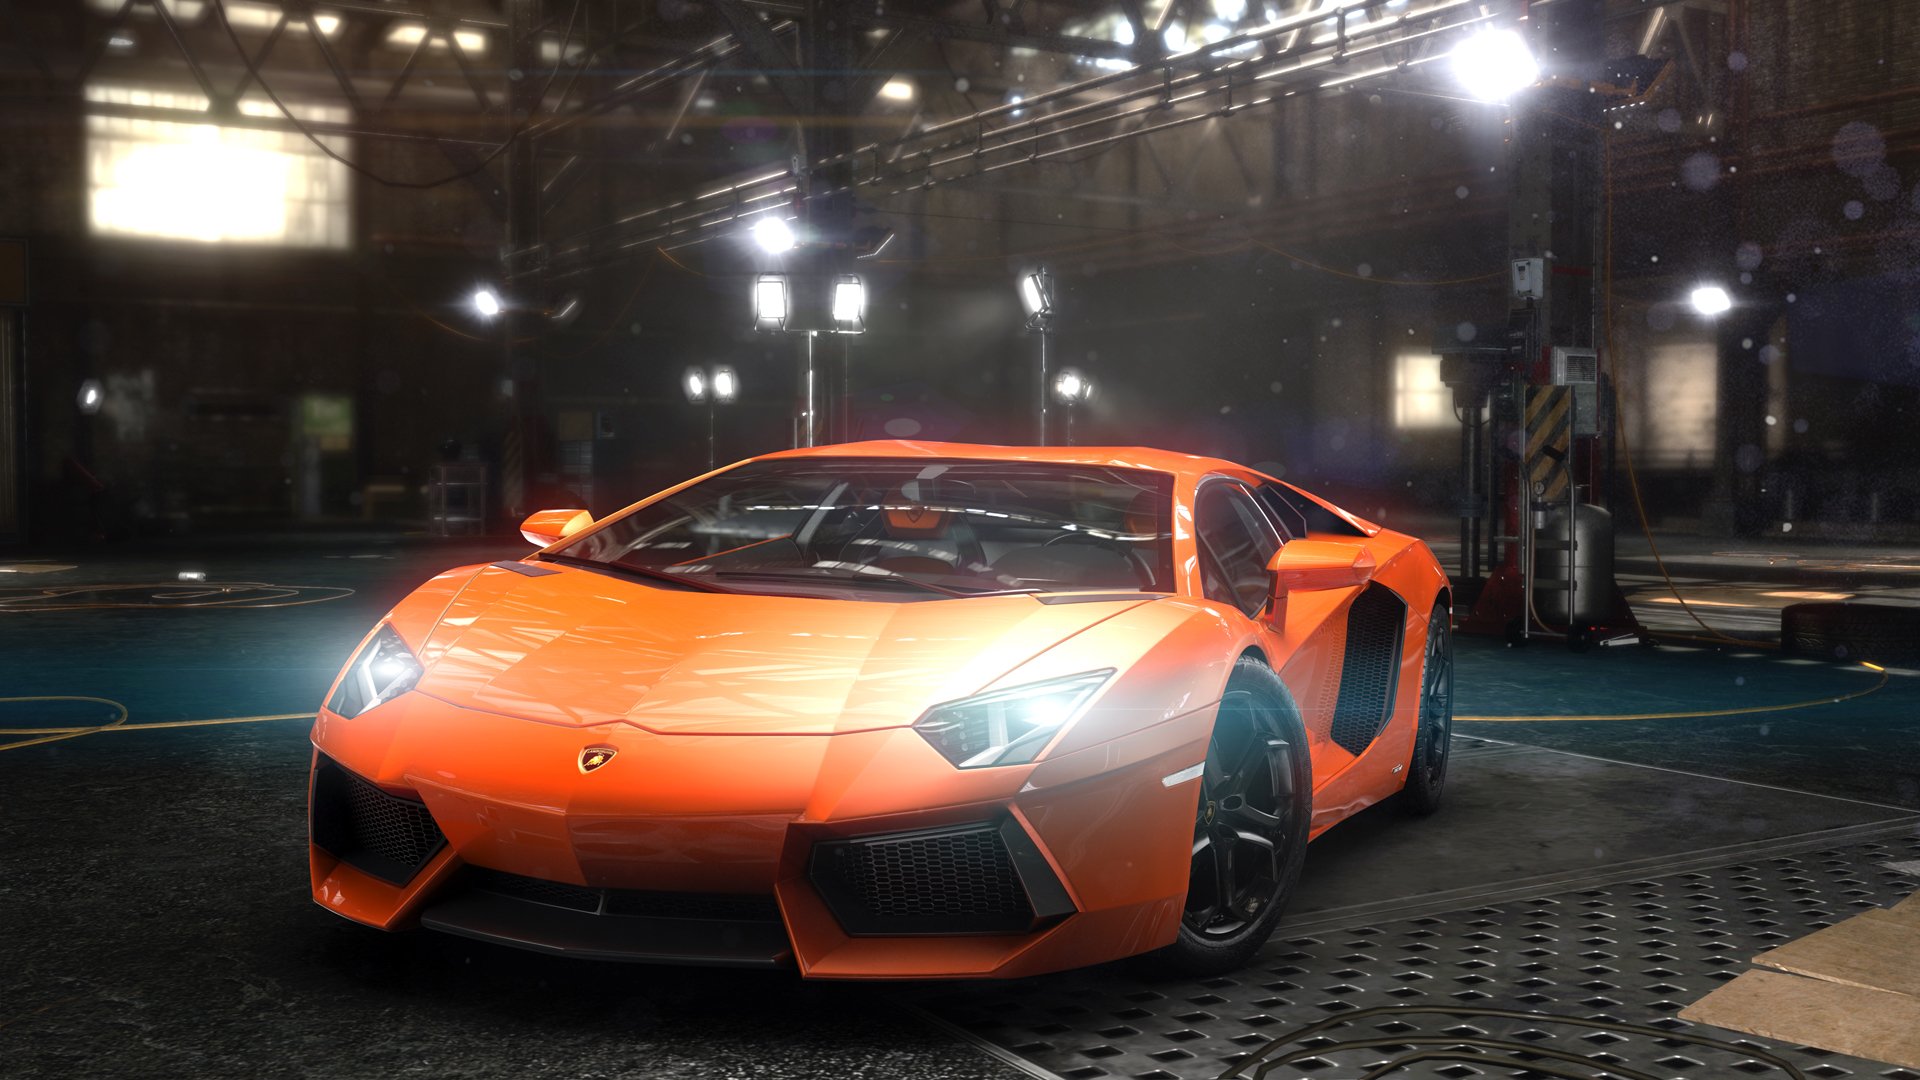 Lamborghini Aventador The Crew Wallpapers Hd Desktop And Mobile Backgrounds